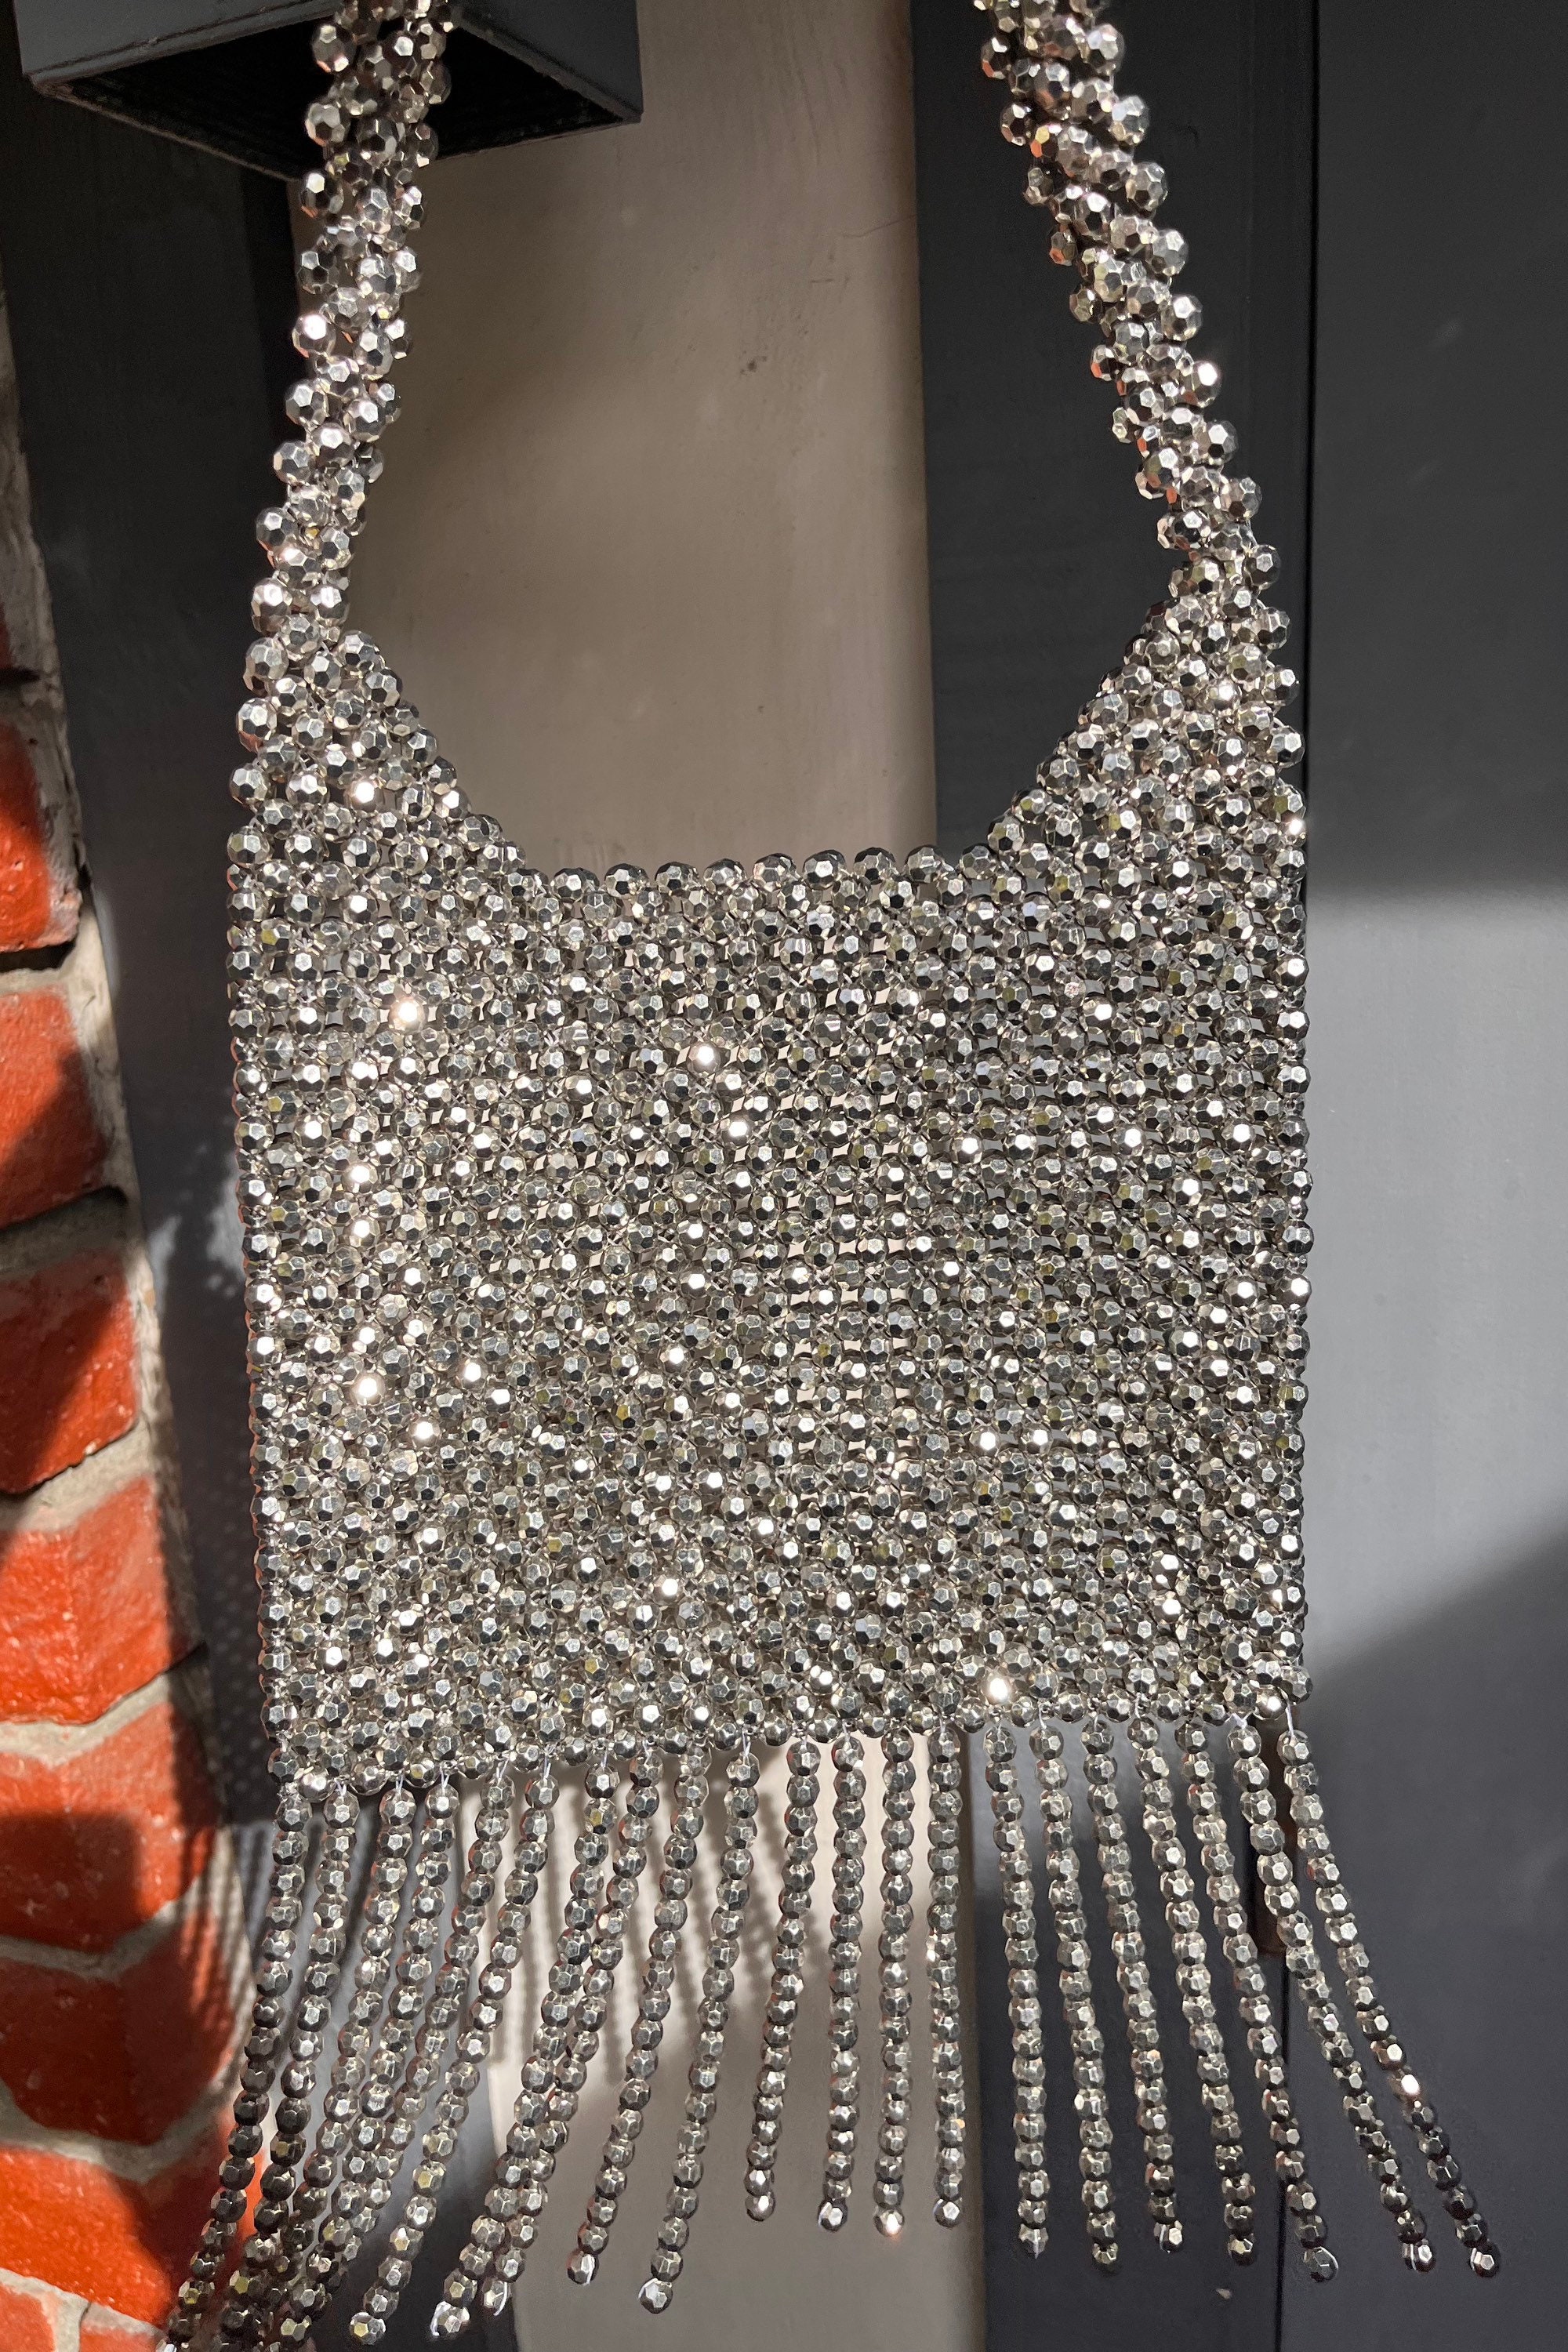  Bling Black Polka Flora RhInestone Shoulder Bag Handbag  Designer inspired : Clothing, Shoes & Jewelry